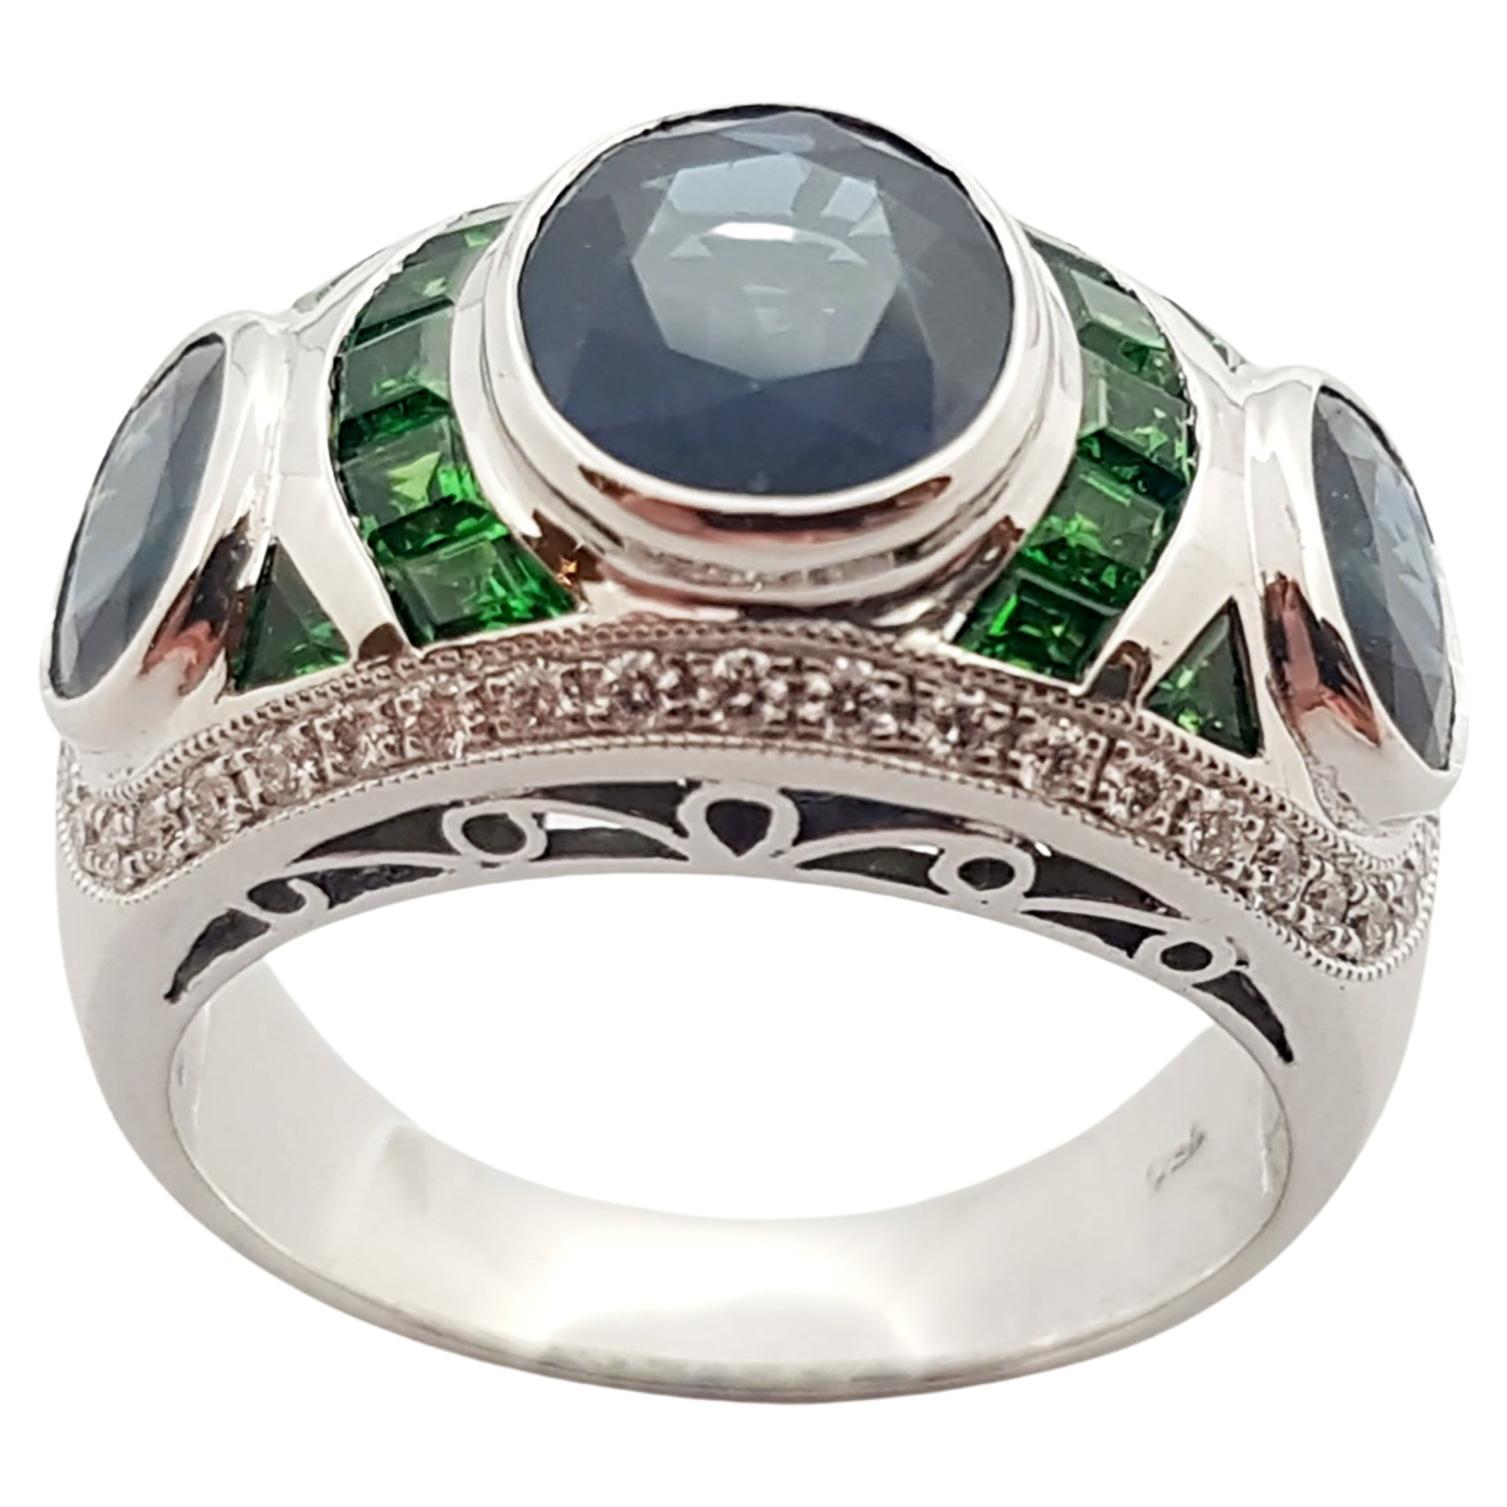 Blue Sapphire, Tsavorite and Diamond Ring Set in 18 Karat White Gold Settings